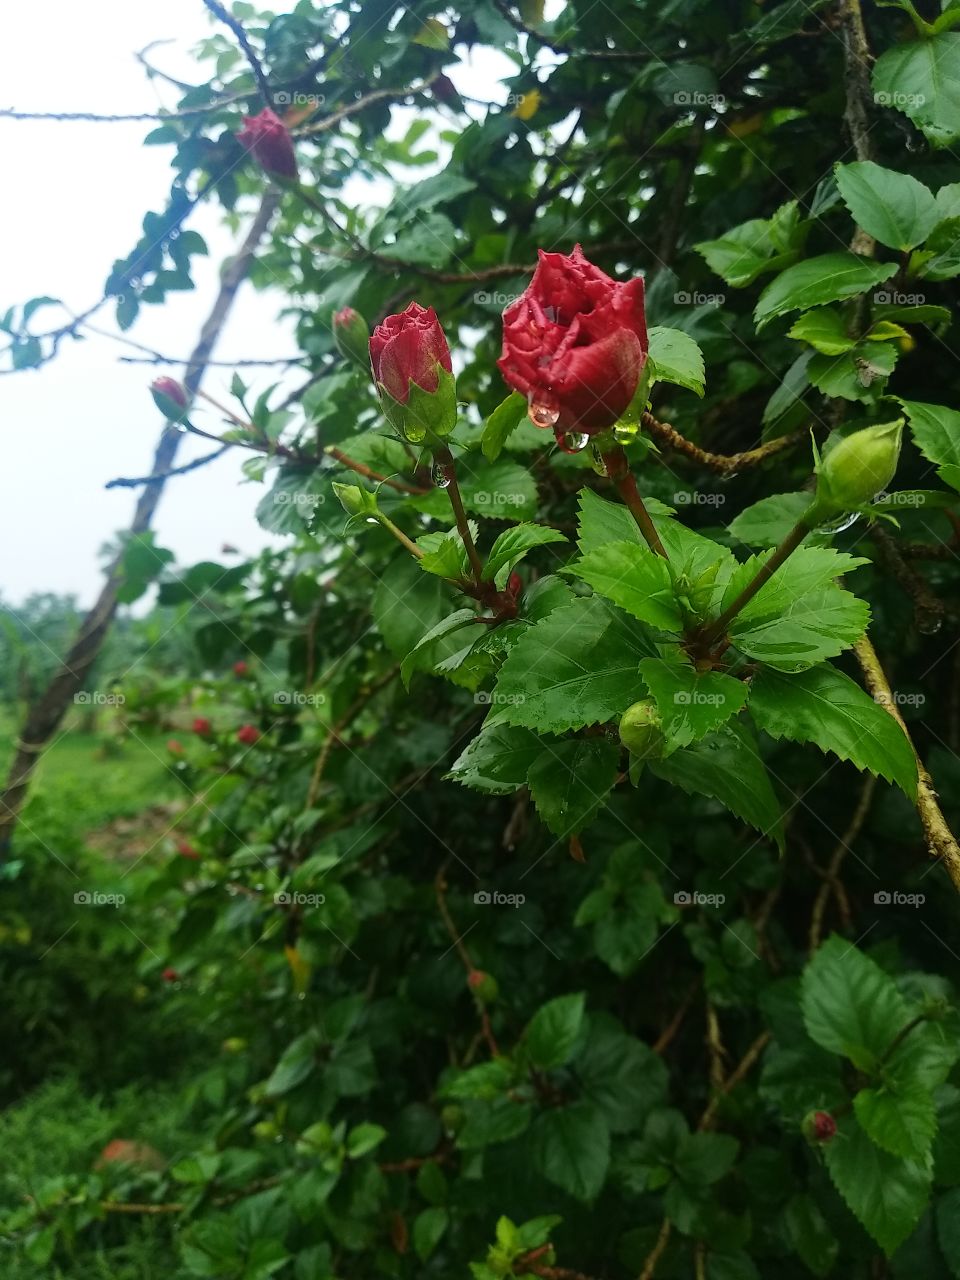 rain drops on the chinarose bud in garden.